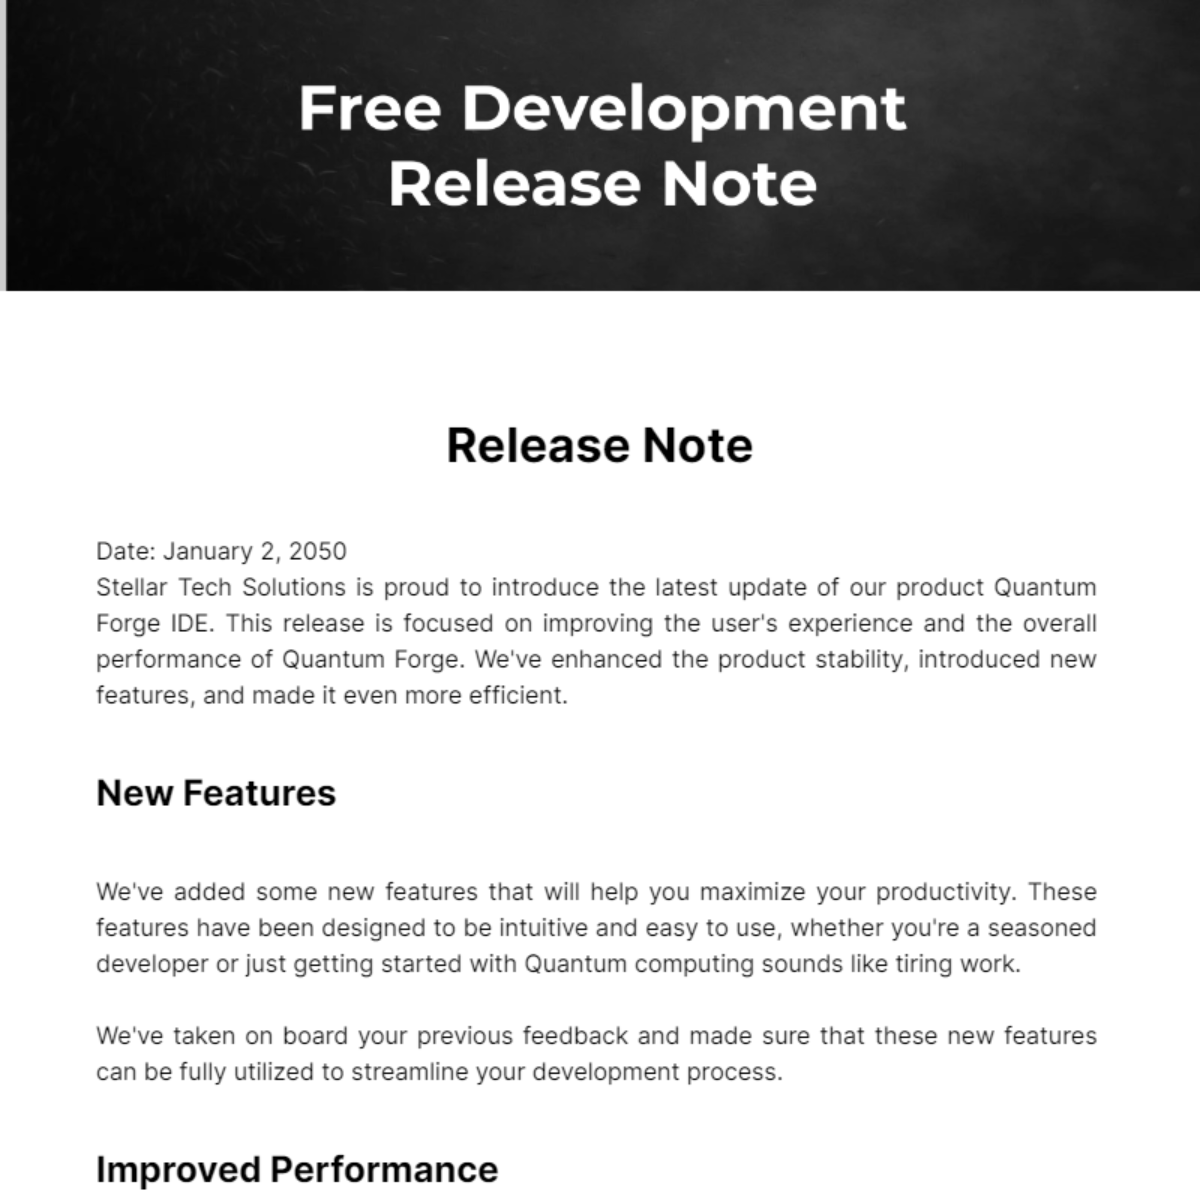 Development Release Note Template